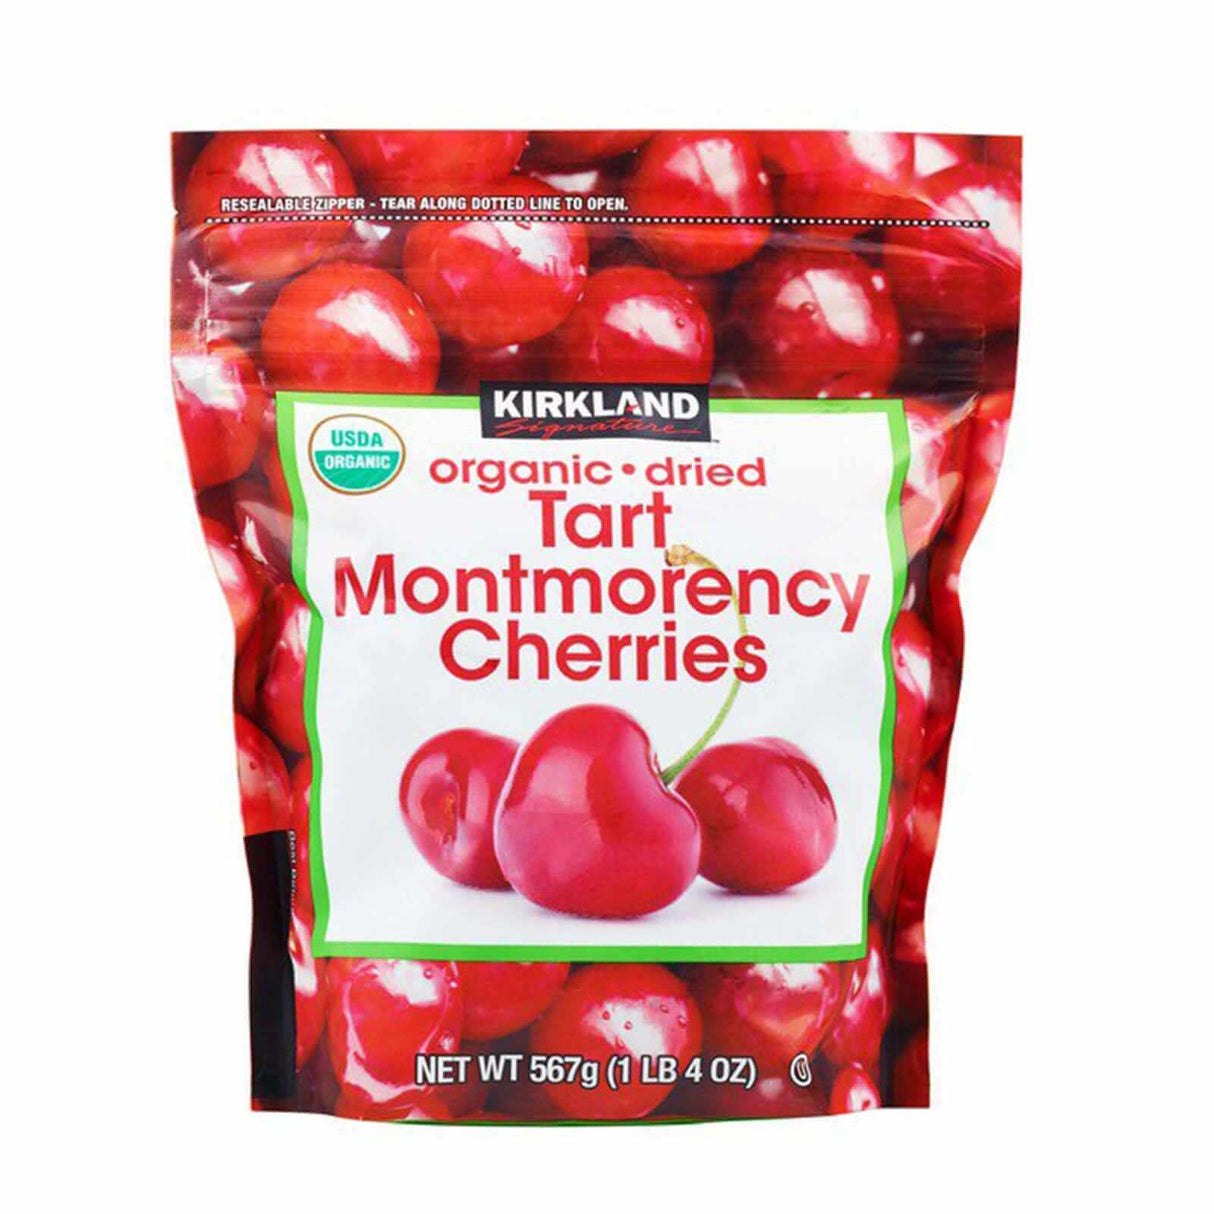 Kirkland Organic Dried Tart Montmorency Cherries